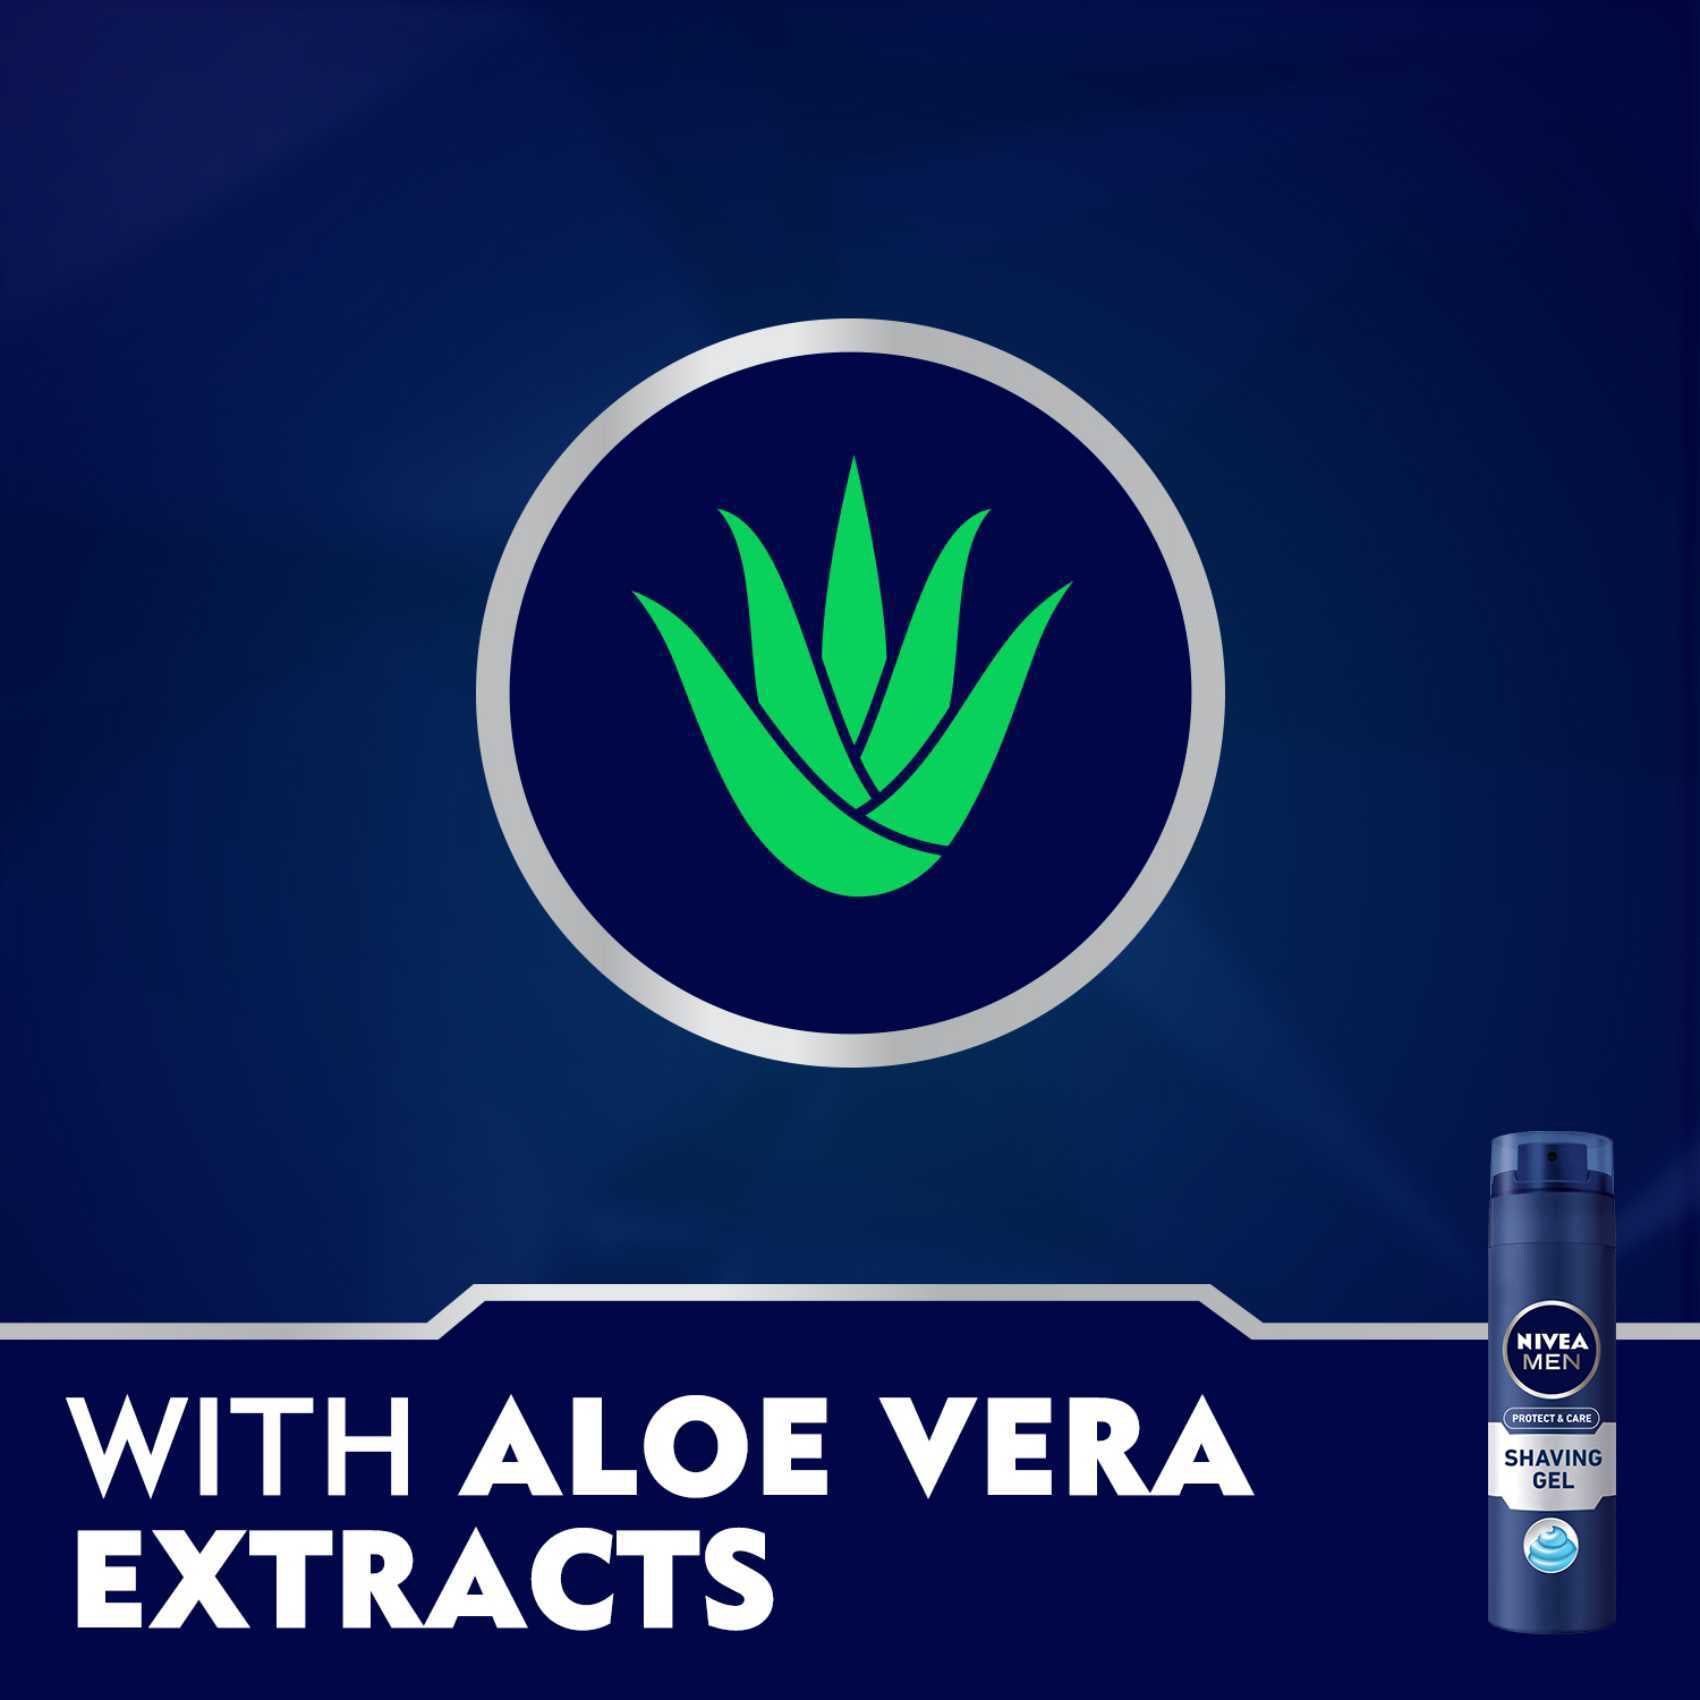 NIVEA MEN Protect And Care Shaving Gel With Aloe Vera 200ml